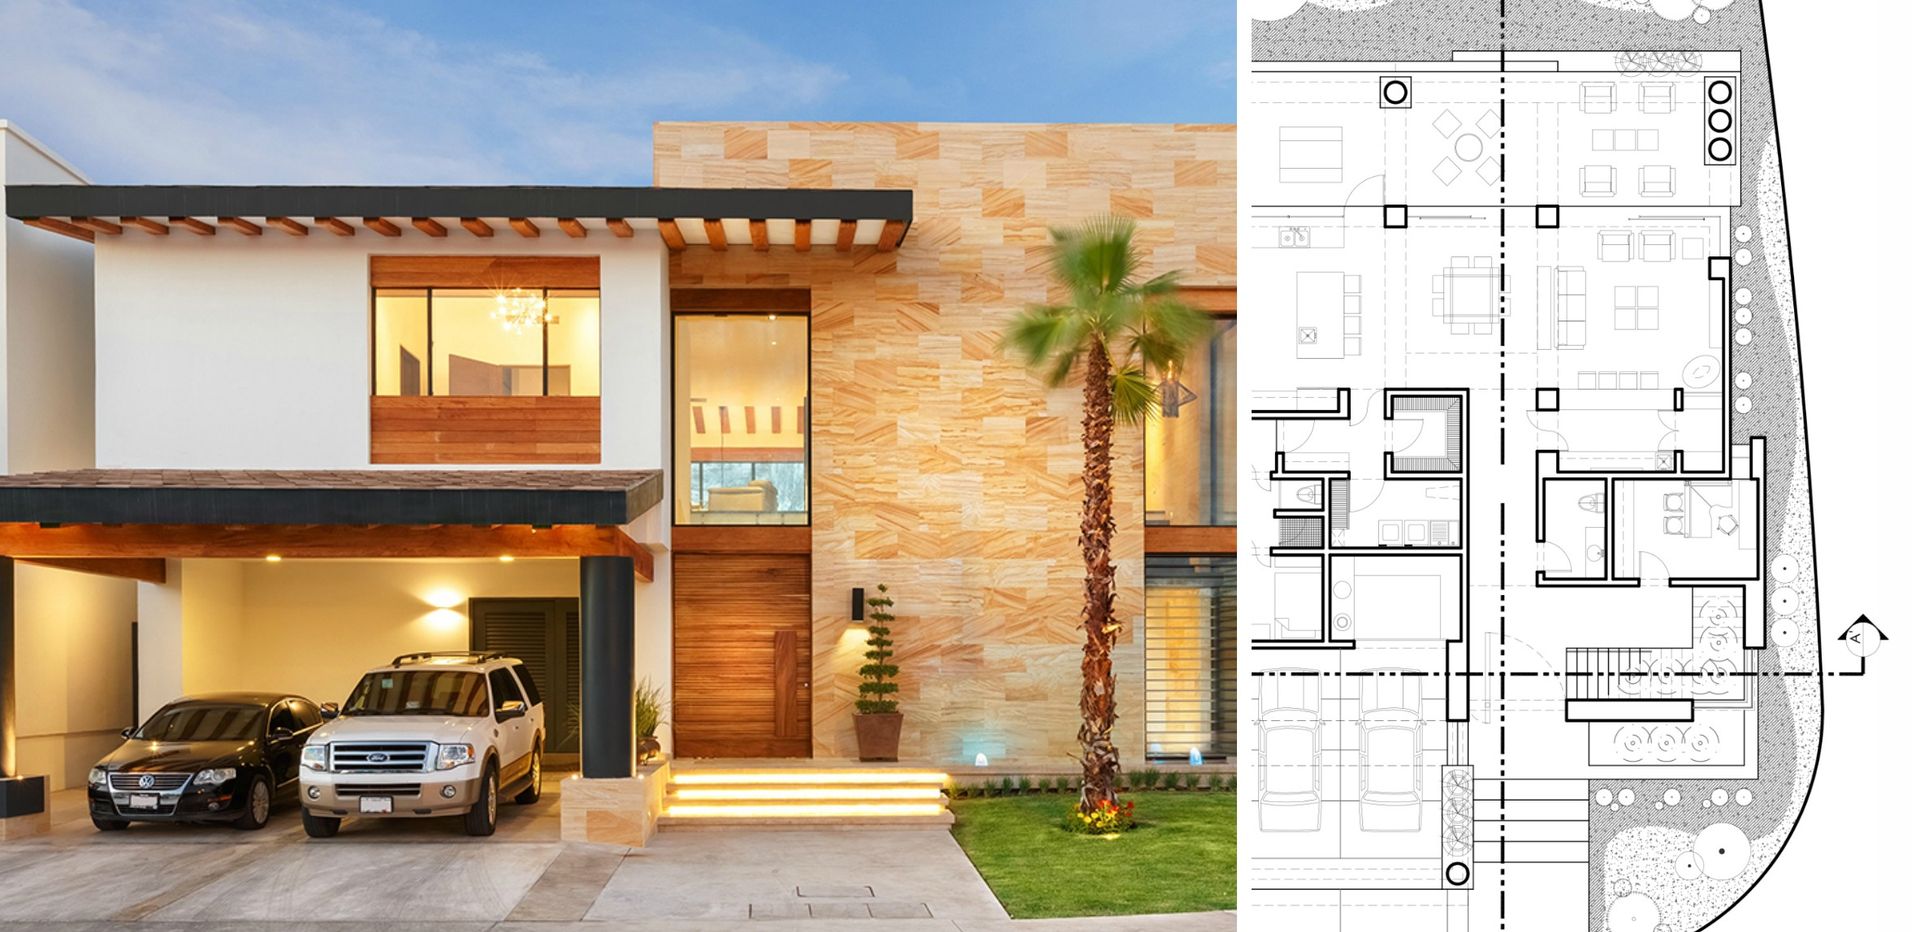 5 casas modernas con sus planos que te inspirarán a diseñar la tuya